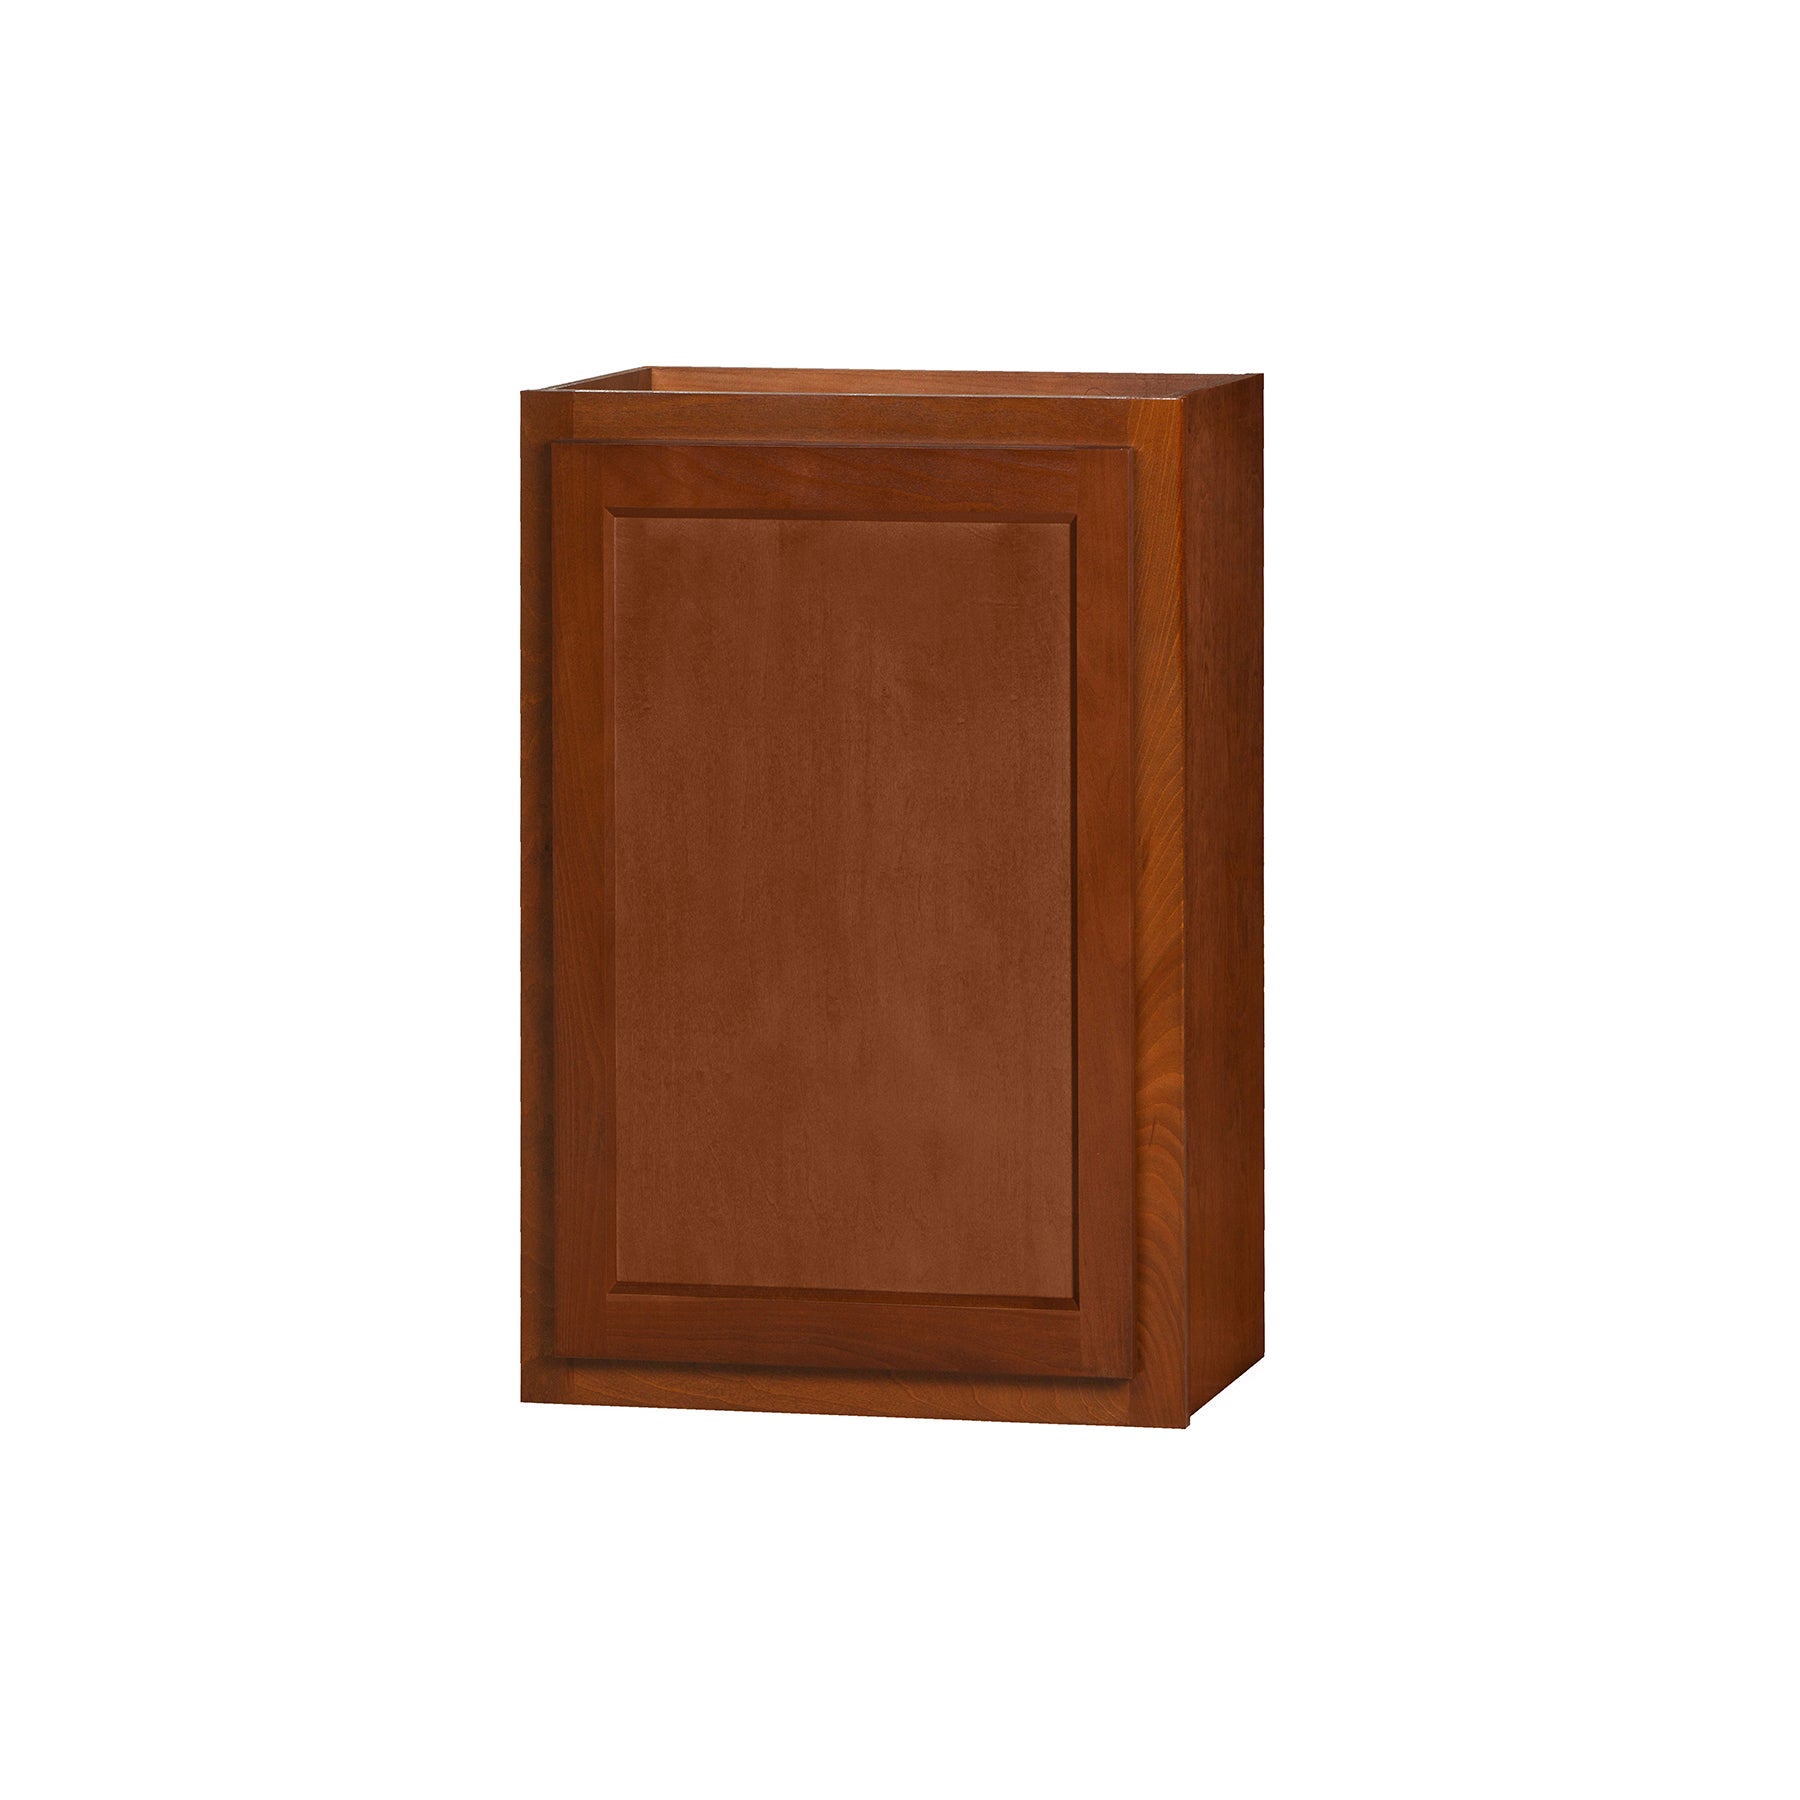 36 inch Wall Cabinets - Glenwood Shaker - 24 Inch W x 36 Inch H x 12 Inch D